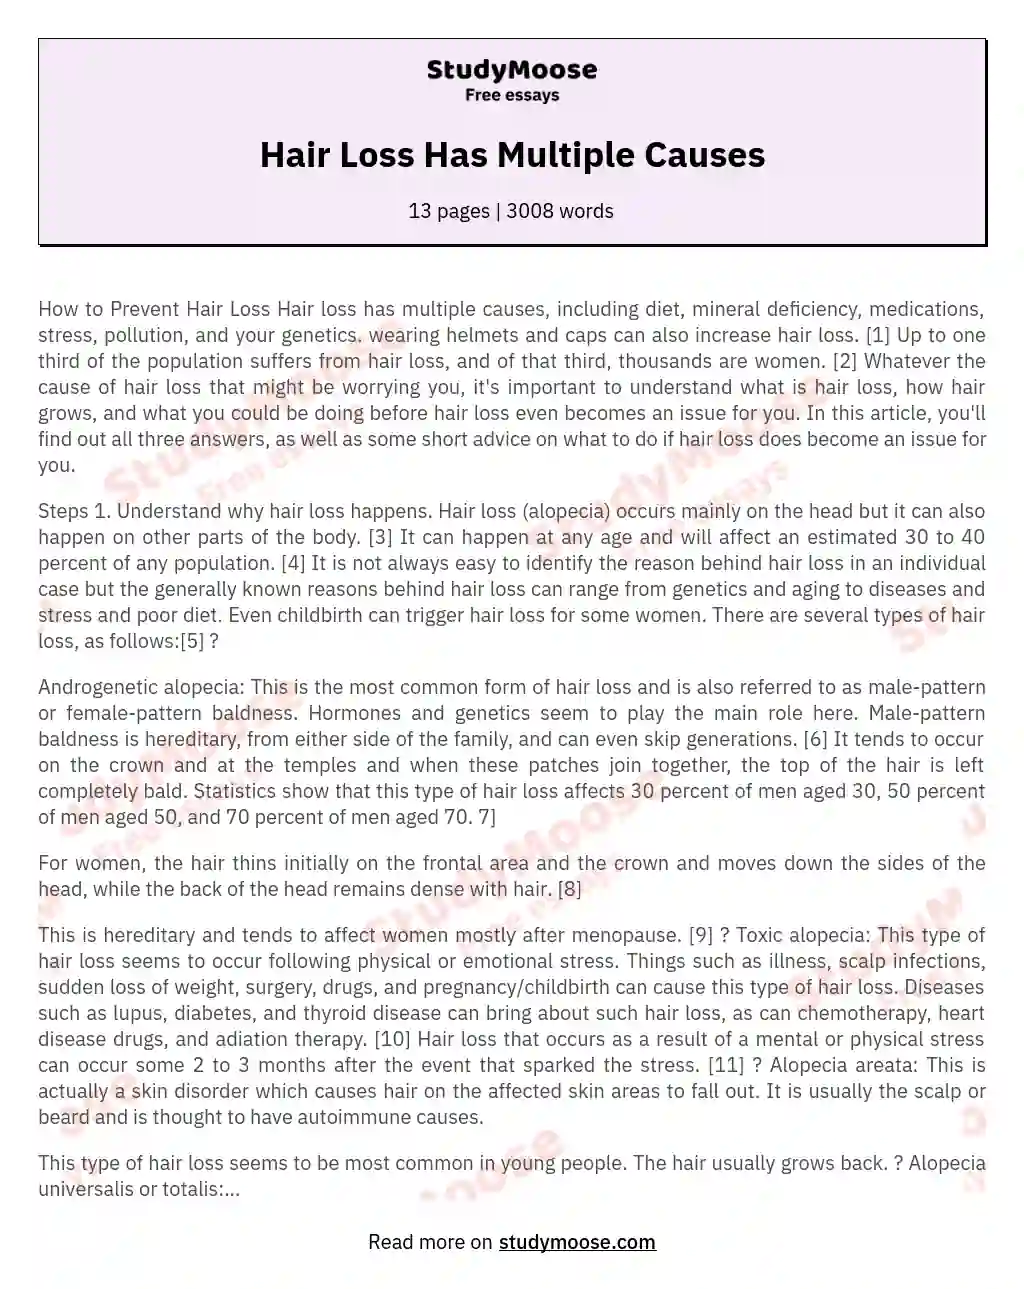 Hair Loss Has Multiple Causes essay